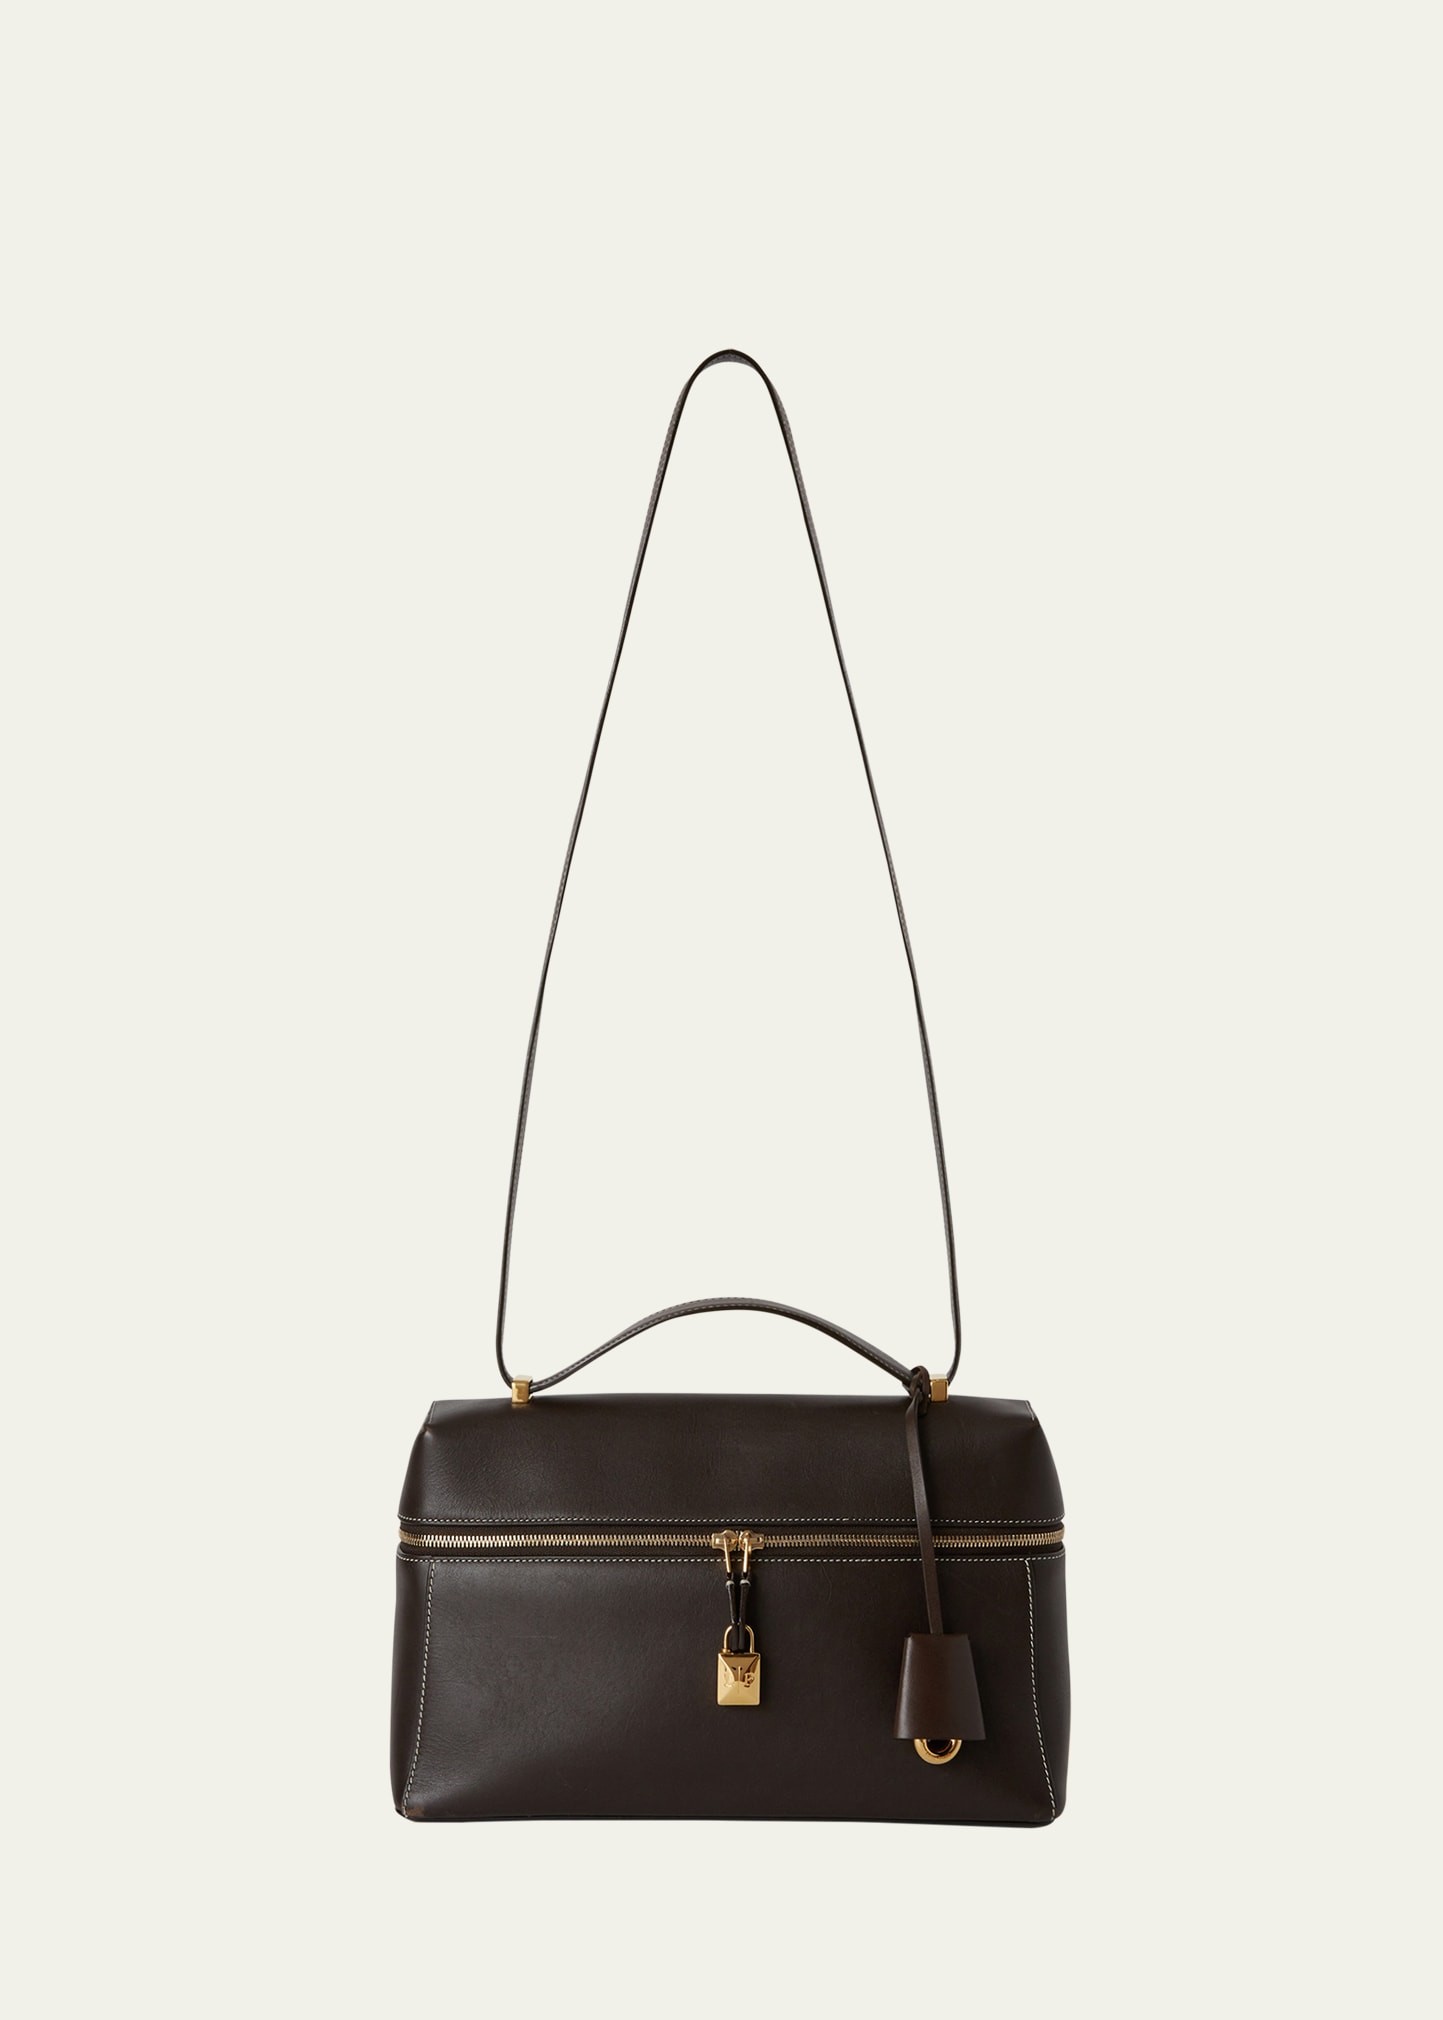 Loro Piana Extra Bag L27 Leather Saddle Bag In H0kl Dark Chocola